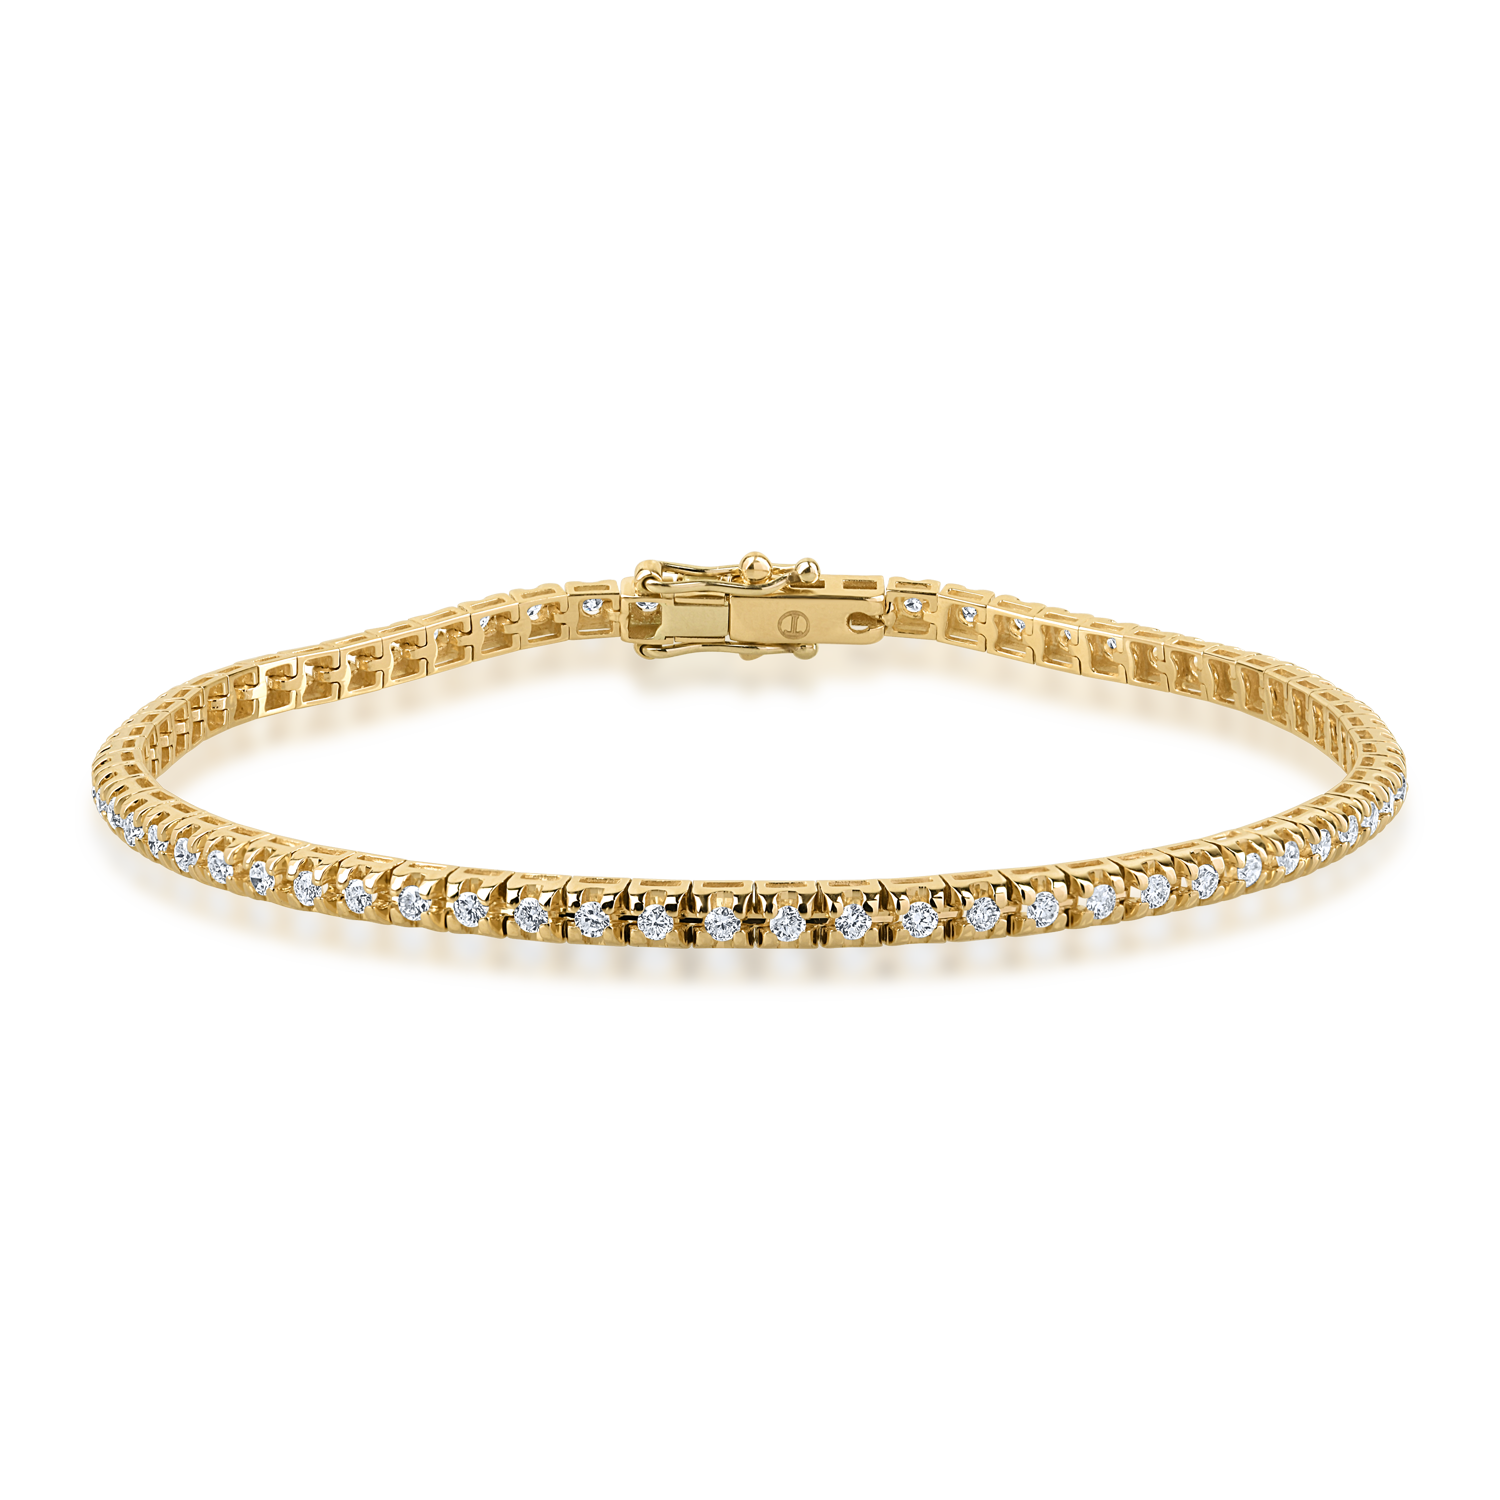 Yellow gold tennis bracelet with 1.5ct diamonds